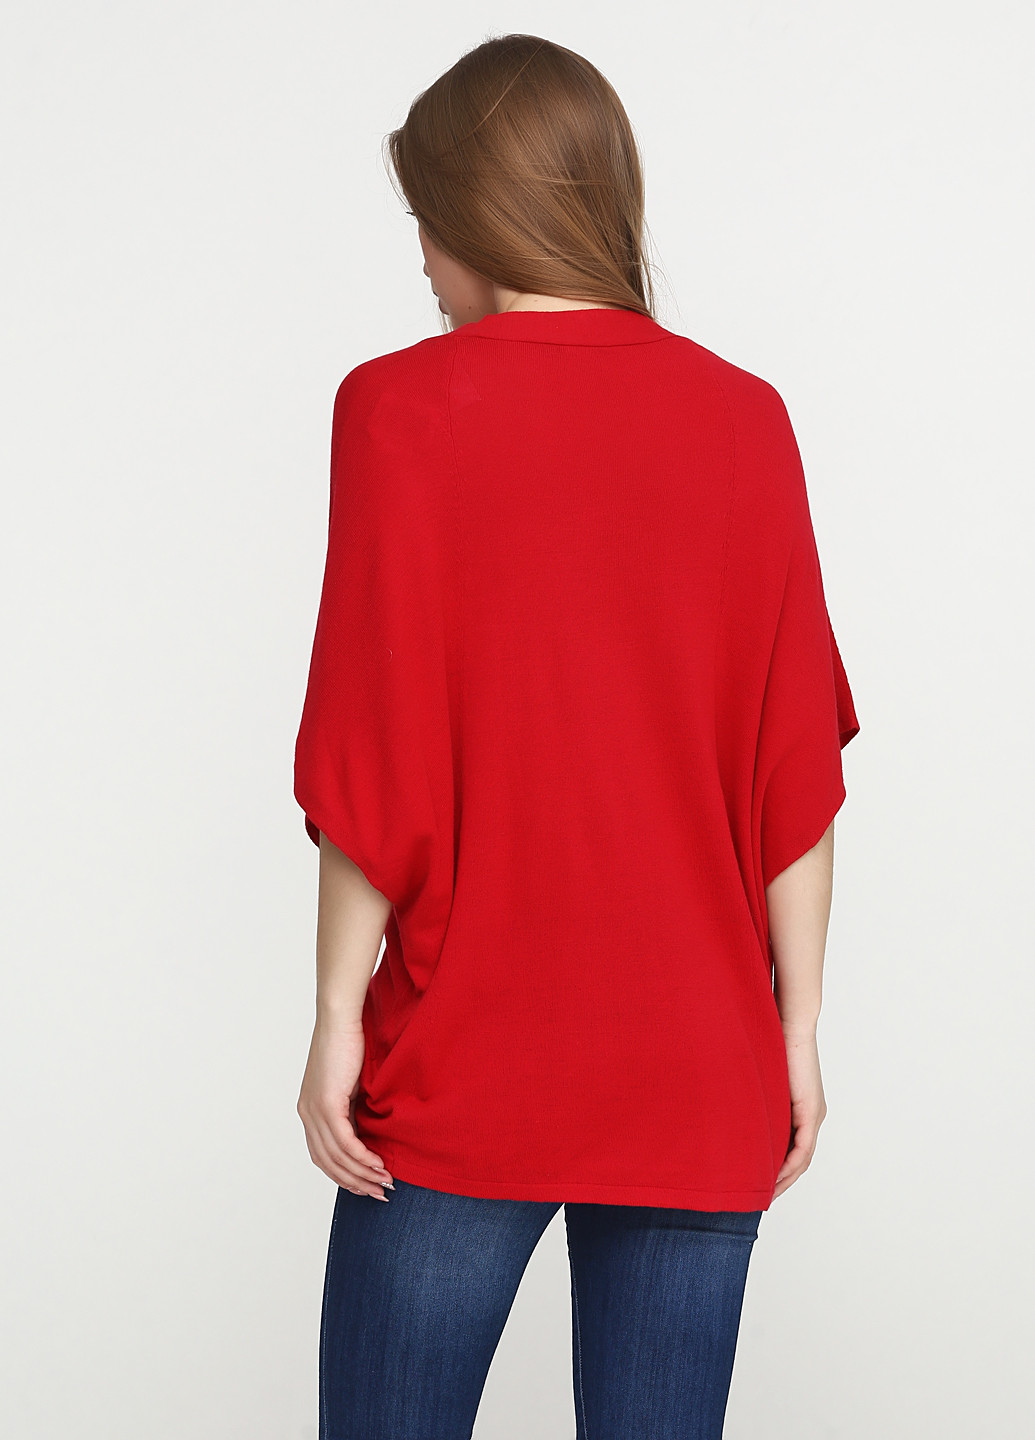 Красный демисезонный пуловер пуловер Steffen Schraut